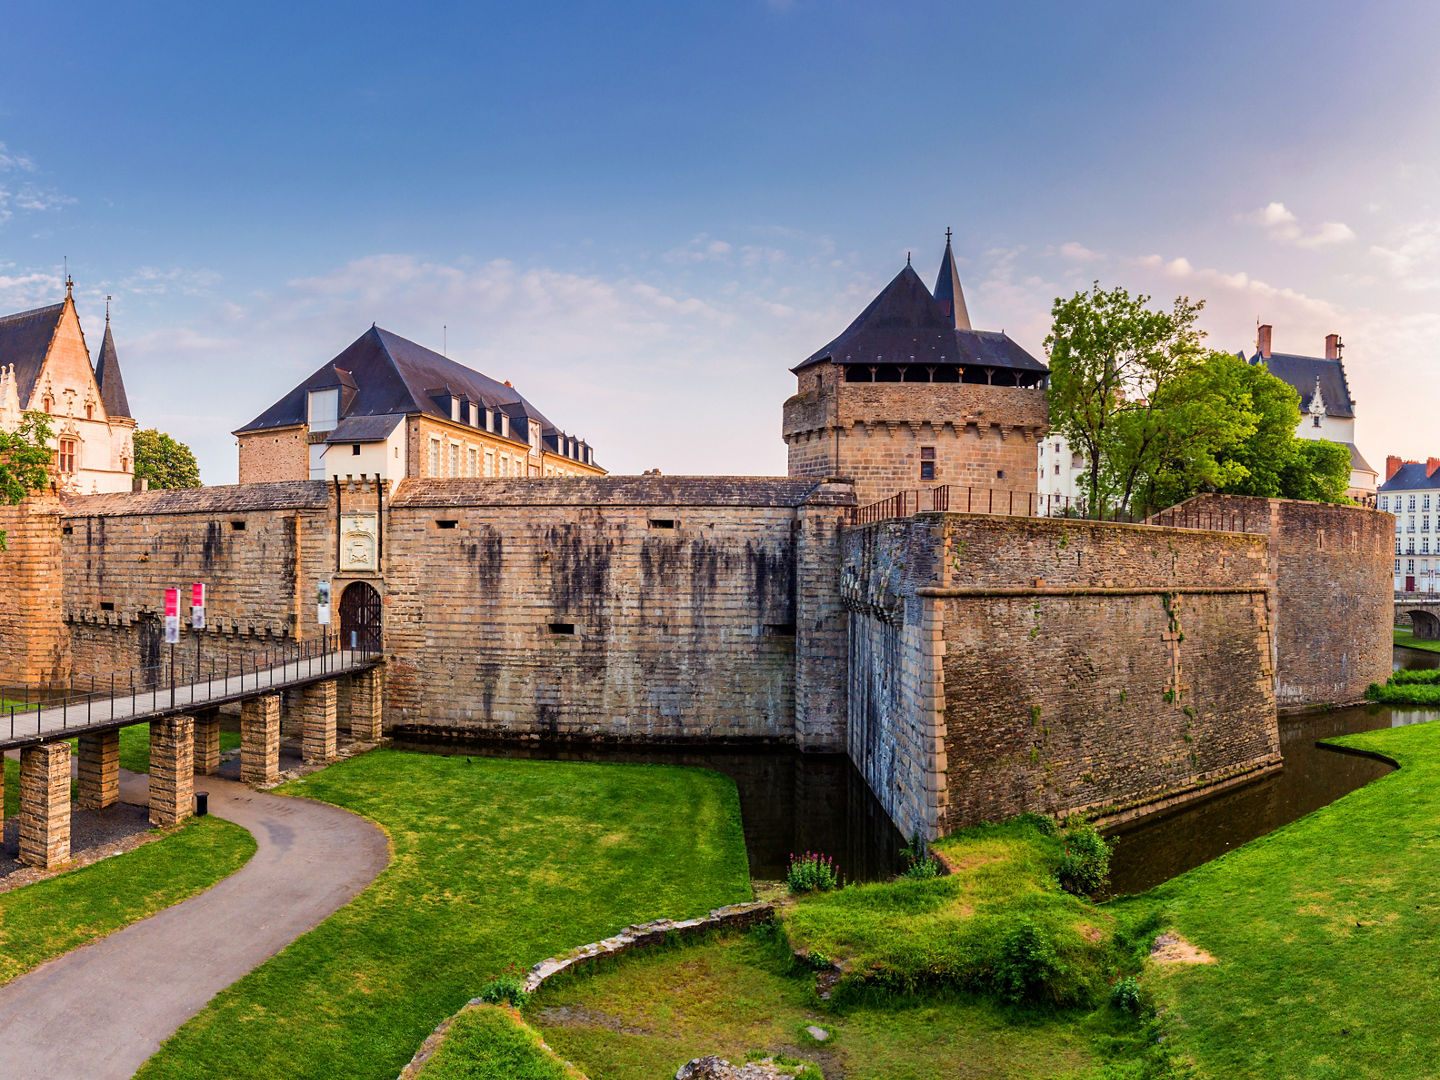 Castle of the Dukes of Brittany (Chateau des Ducs de Bretagne) in Nantes, France